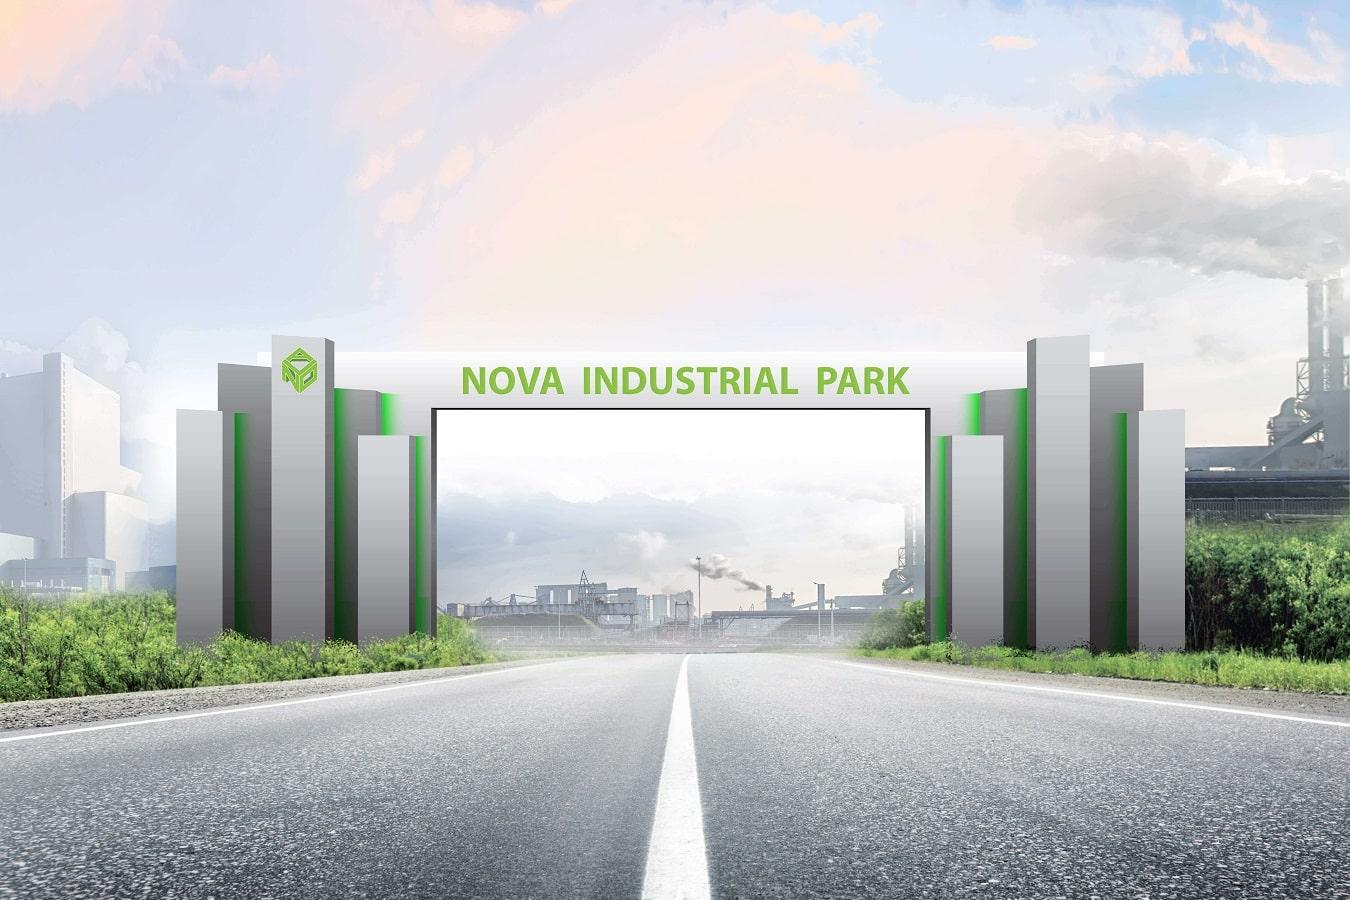 Nova Industrial Park